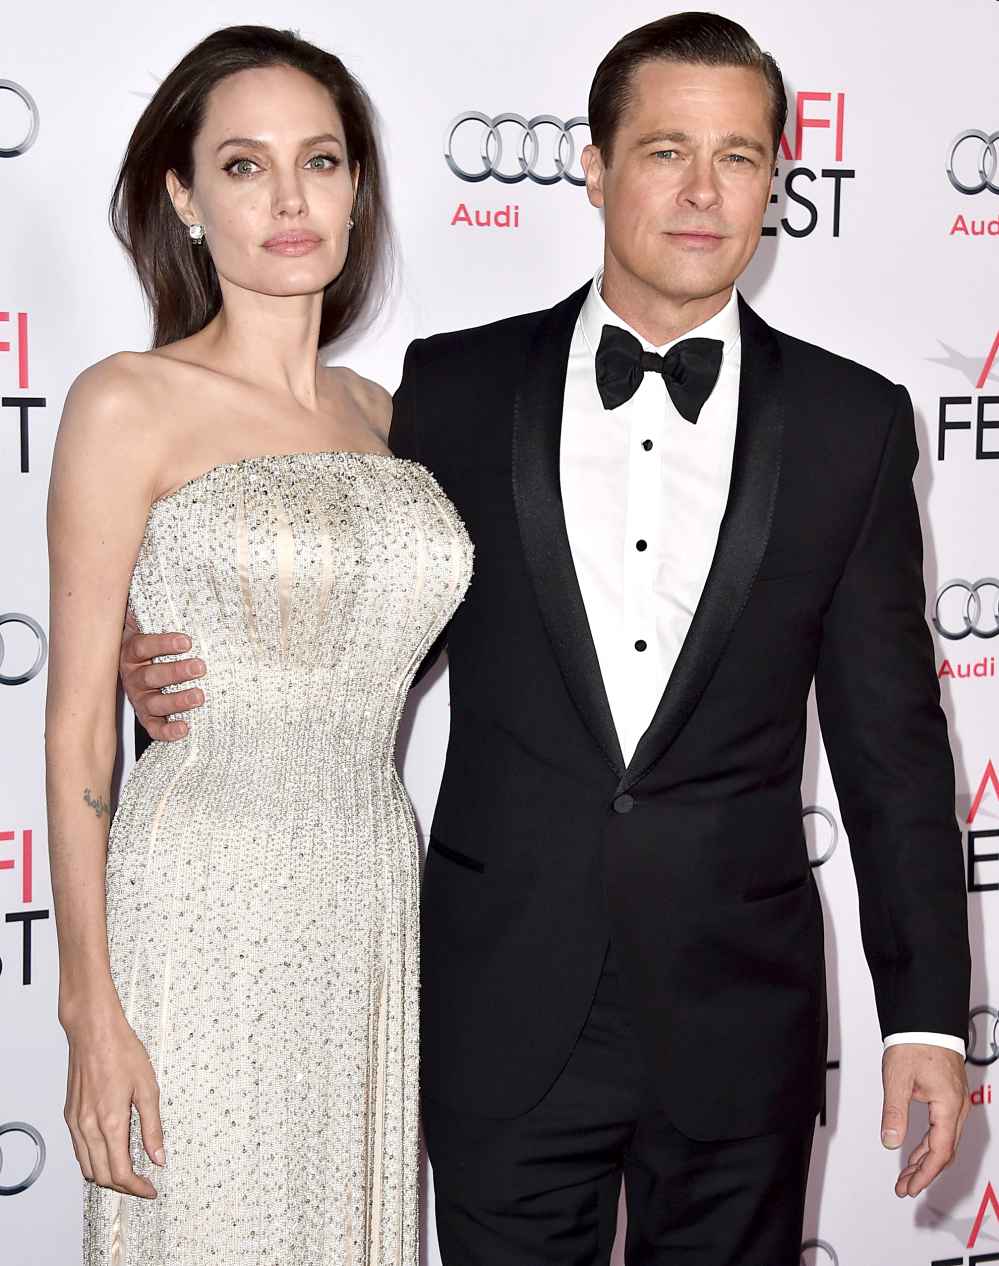 Angelina Jolie Brad Pitt Older Kids Are Acutely Aware Messy Divorce